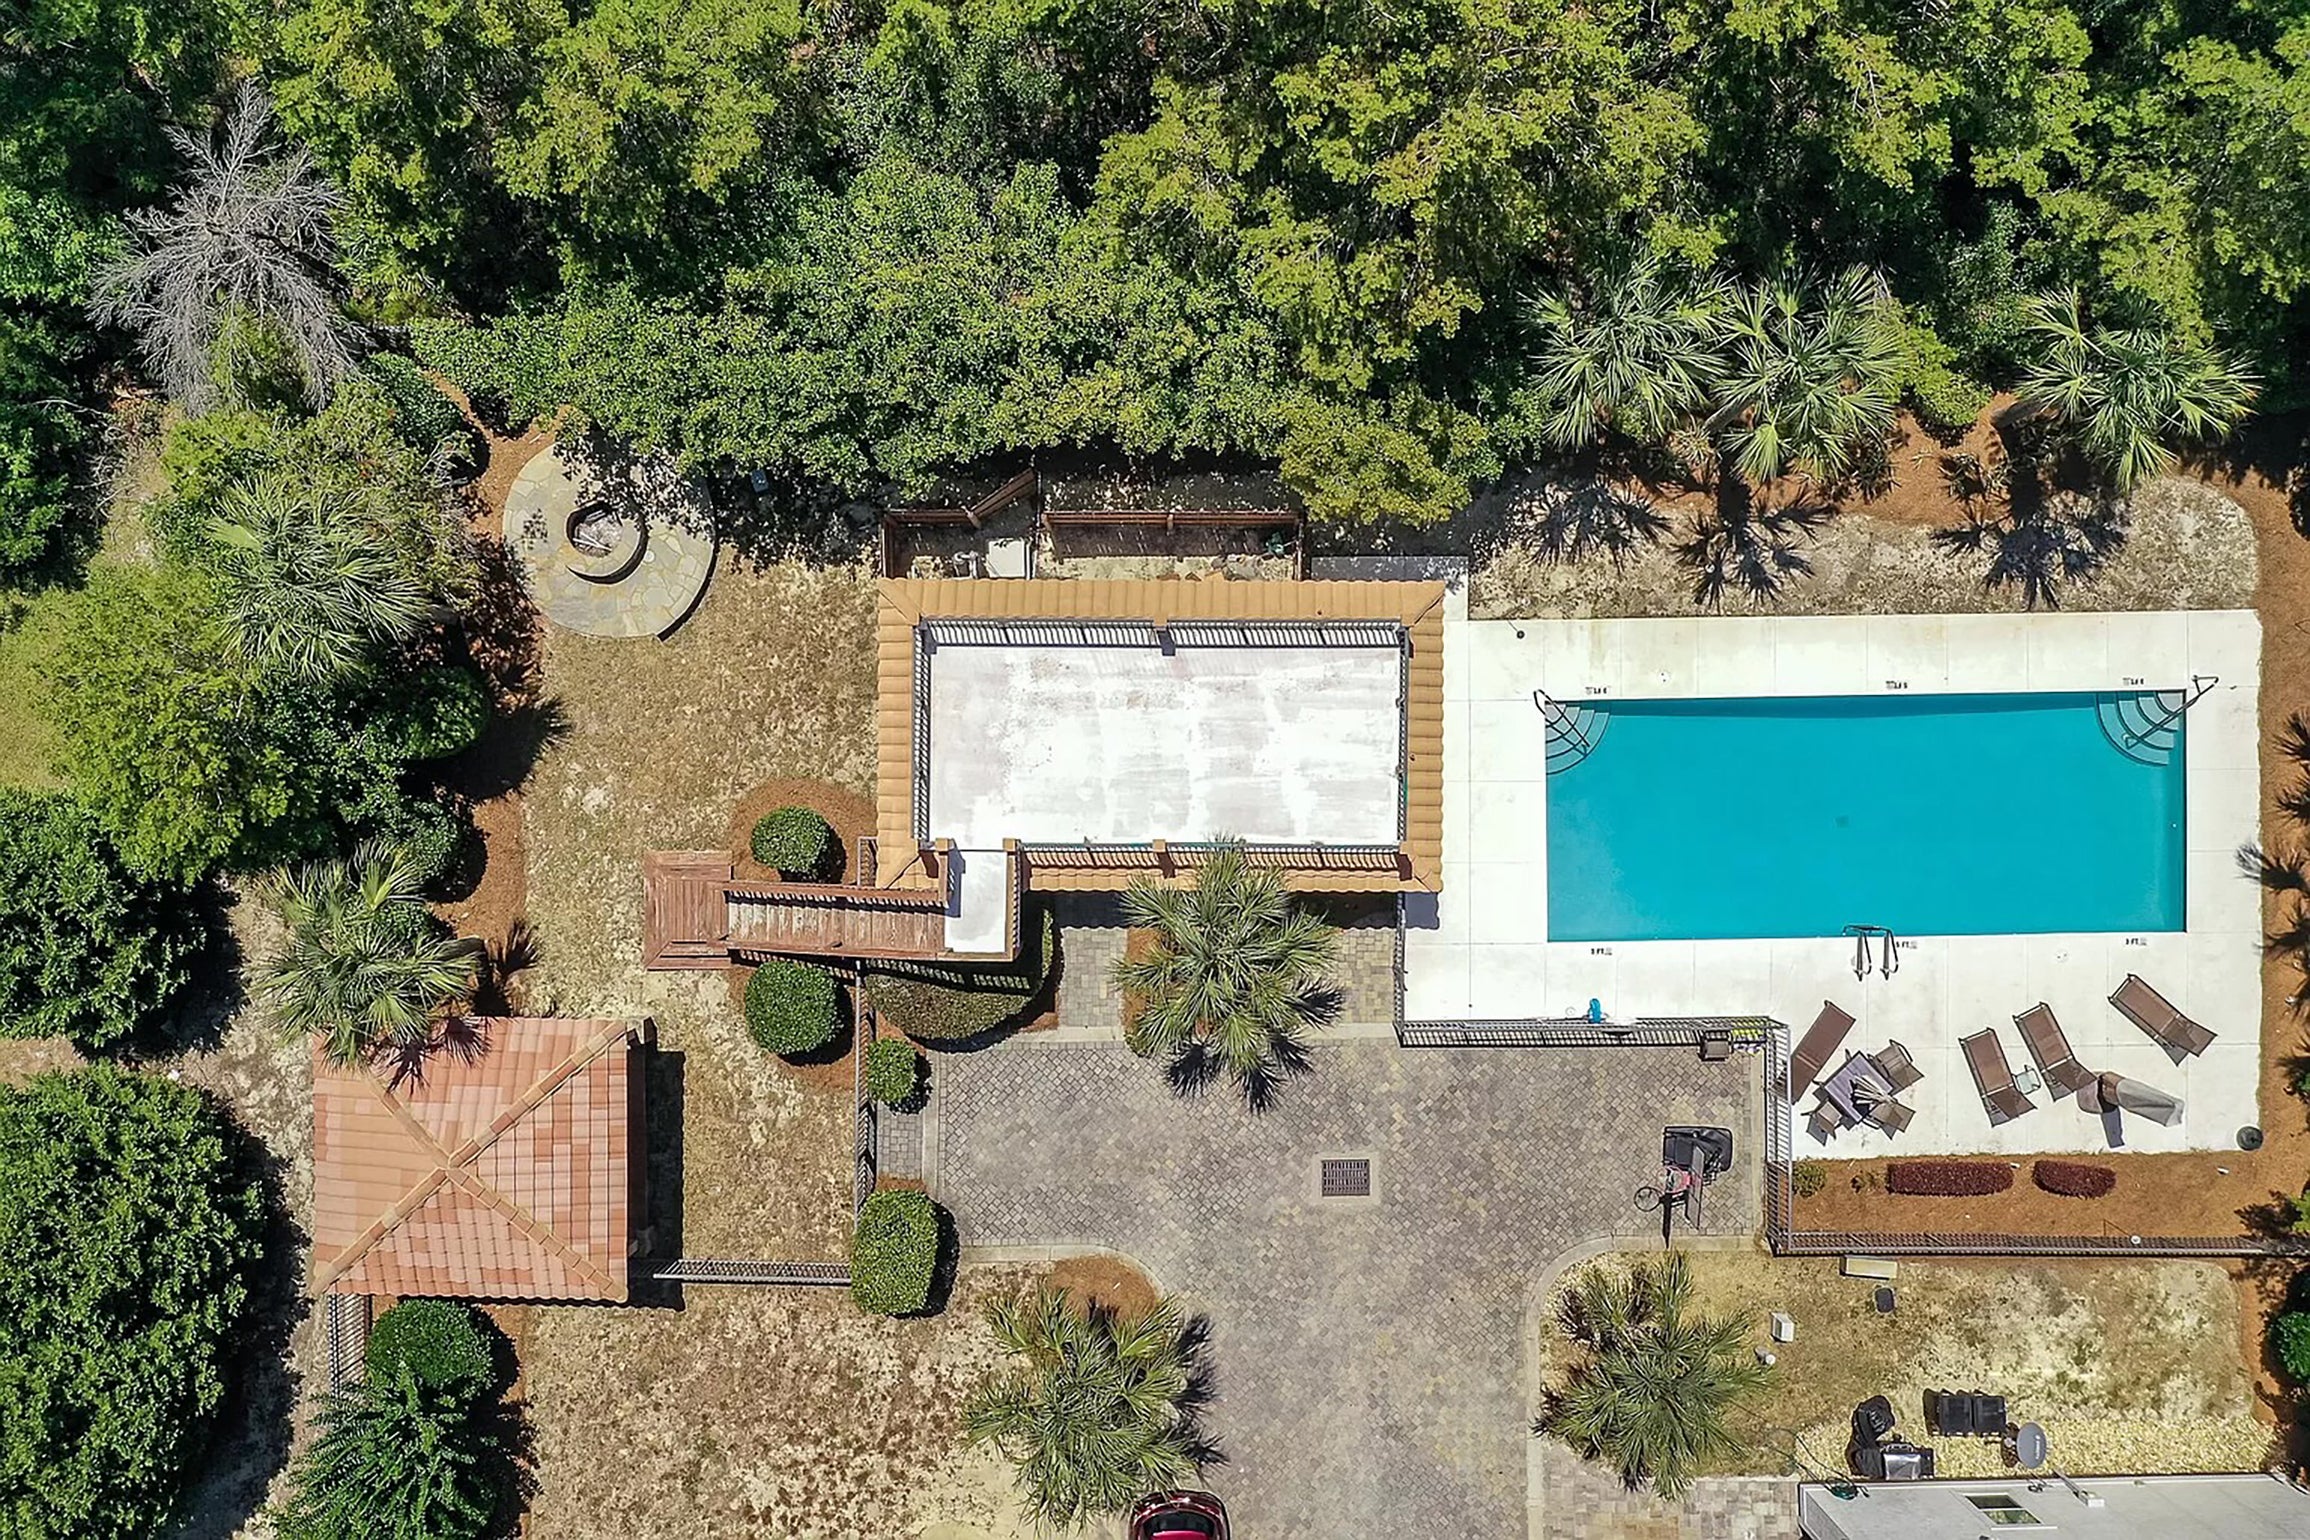 Aerial view community pool